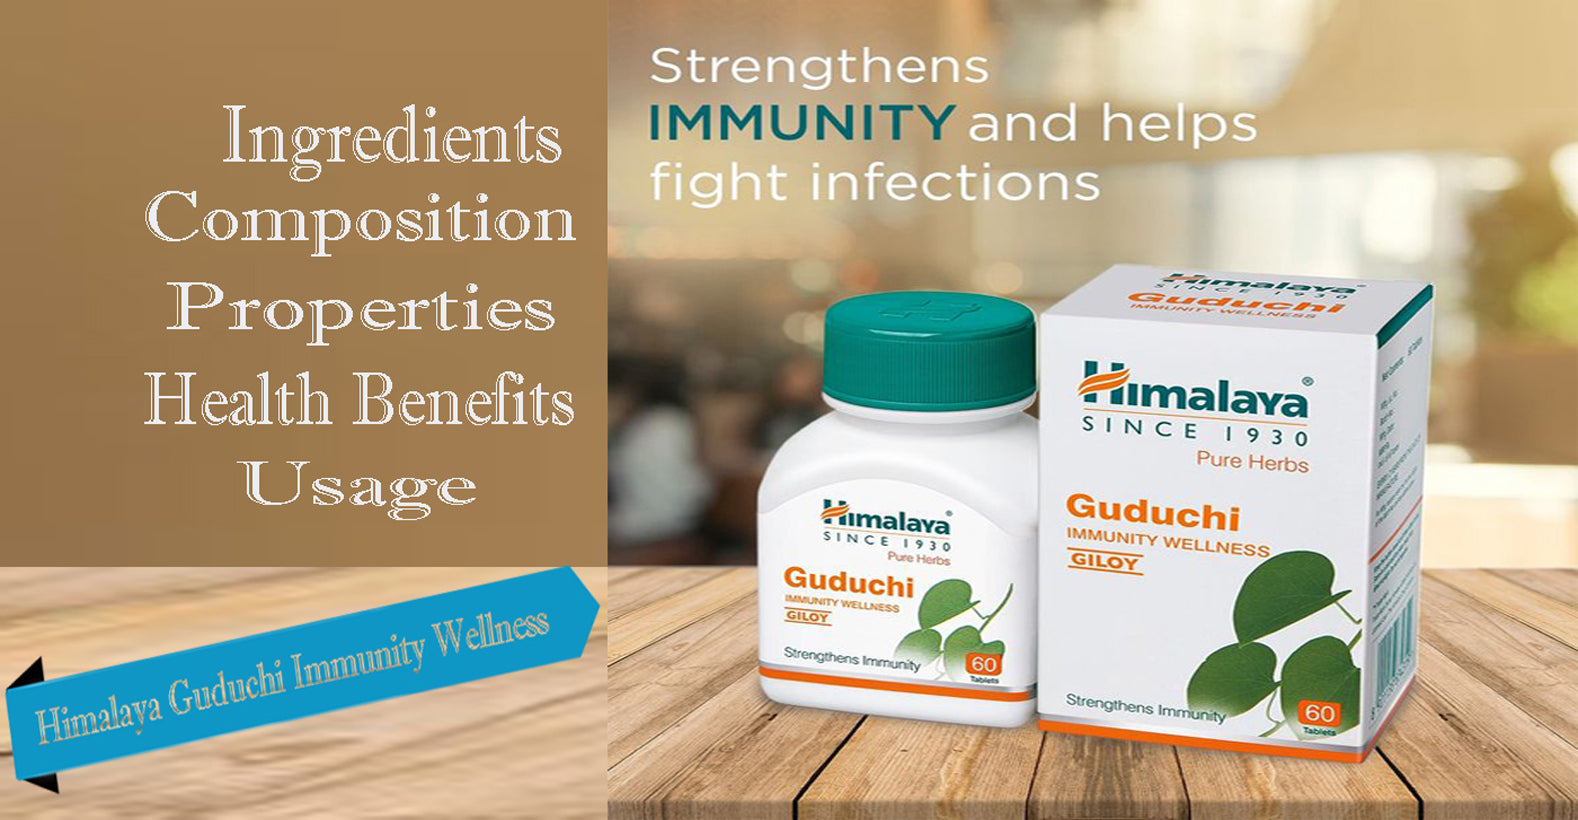 Himalaya Guduchi Immunity Wellness - Ingredients, Composition, Properties, Health Benefits, Usage